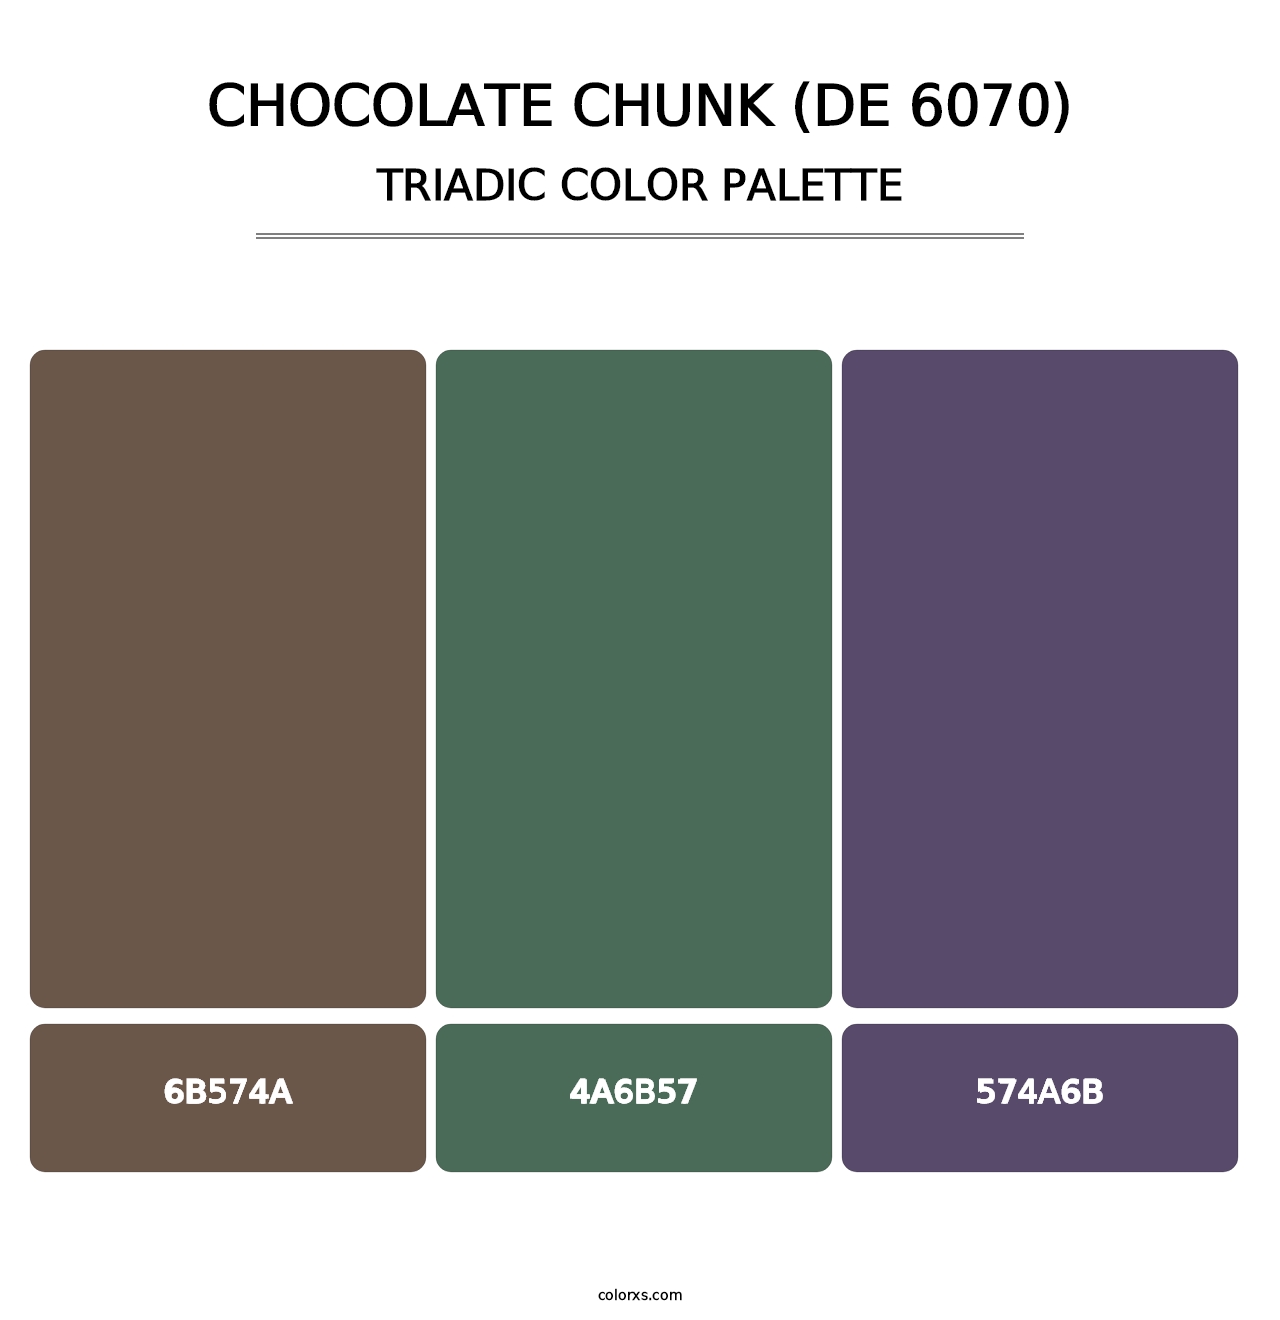 Chocolate Chunk (DE 6070) - Triadic Color Palette